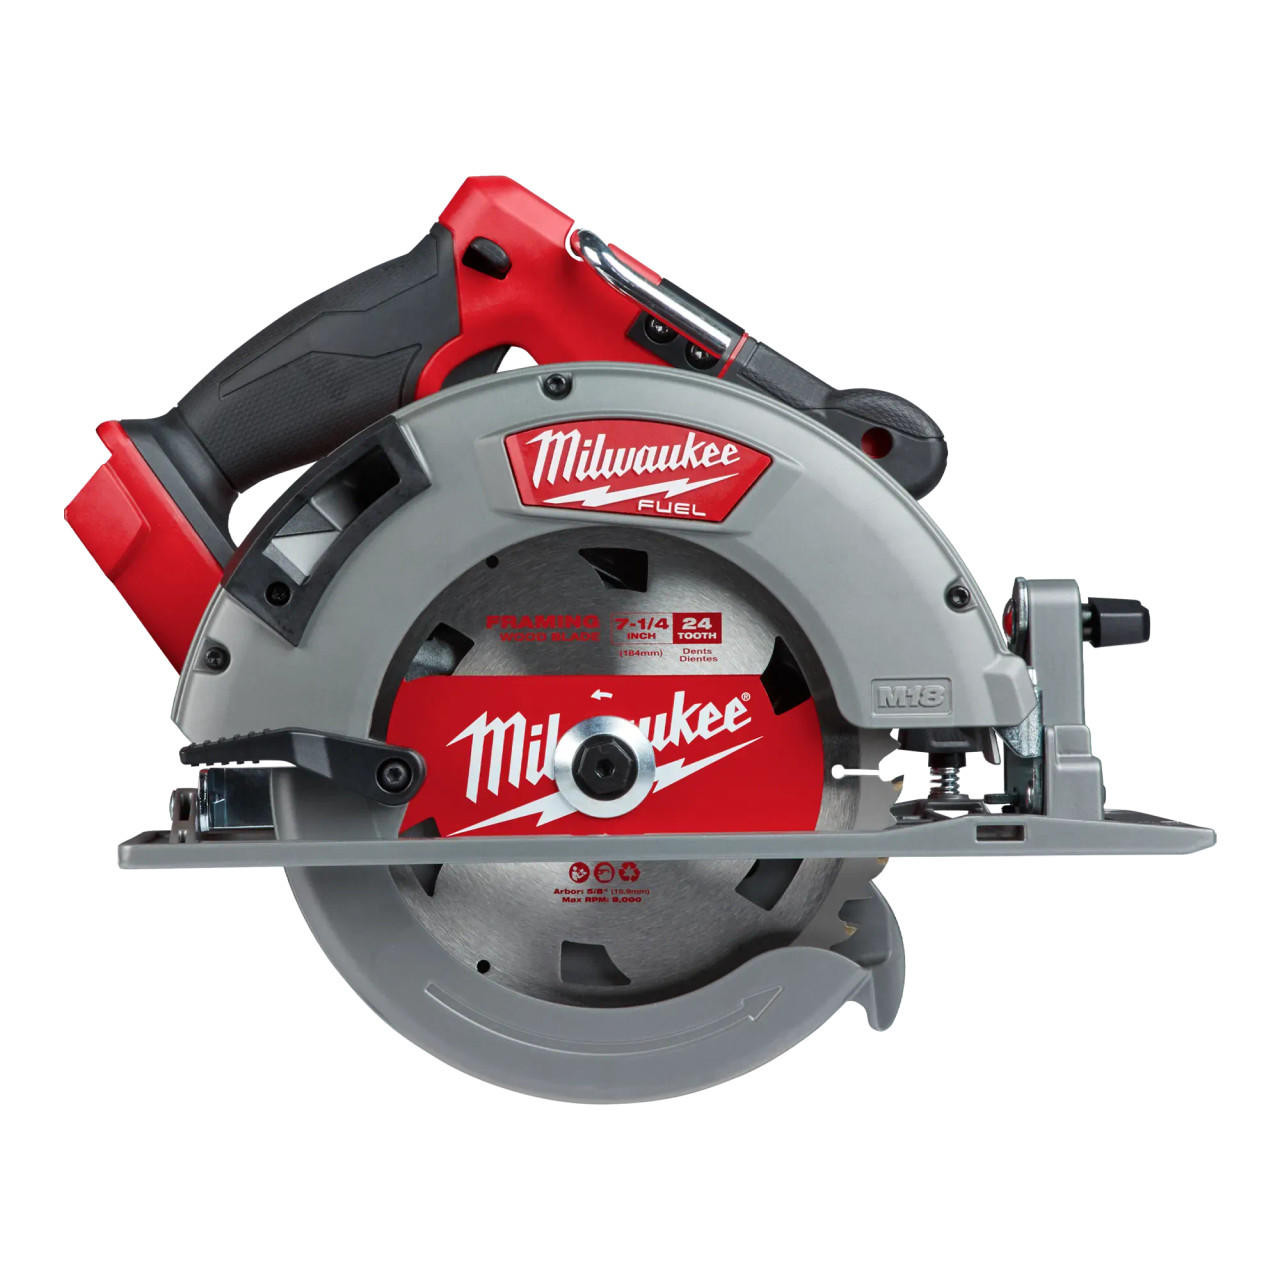  Milwaukee M18 FUEL 7-1/4" Circular Saw - Tool Only 2732-20 